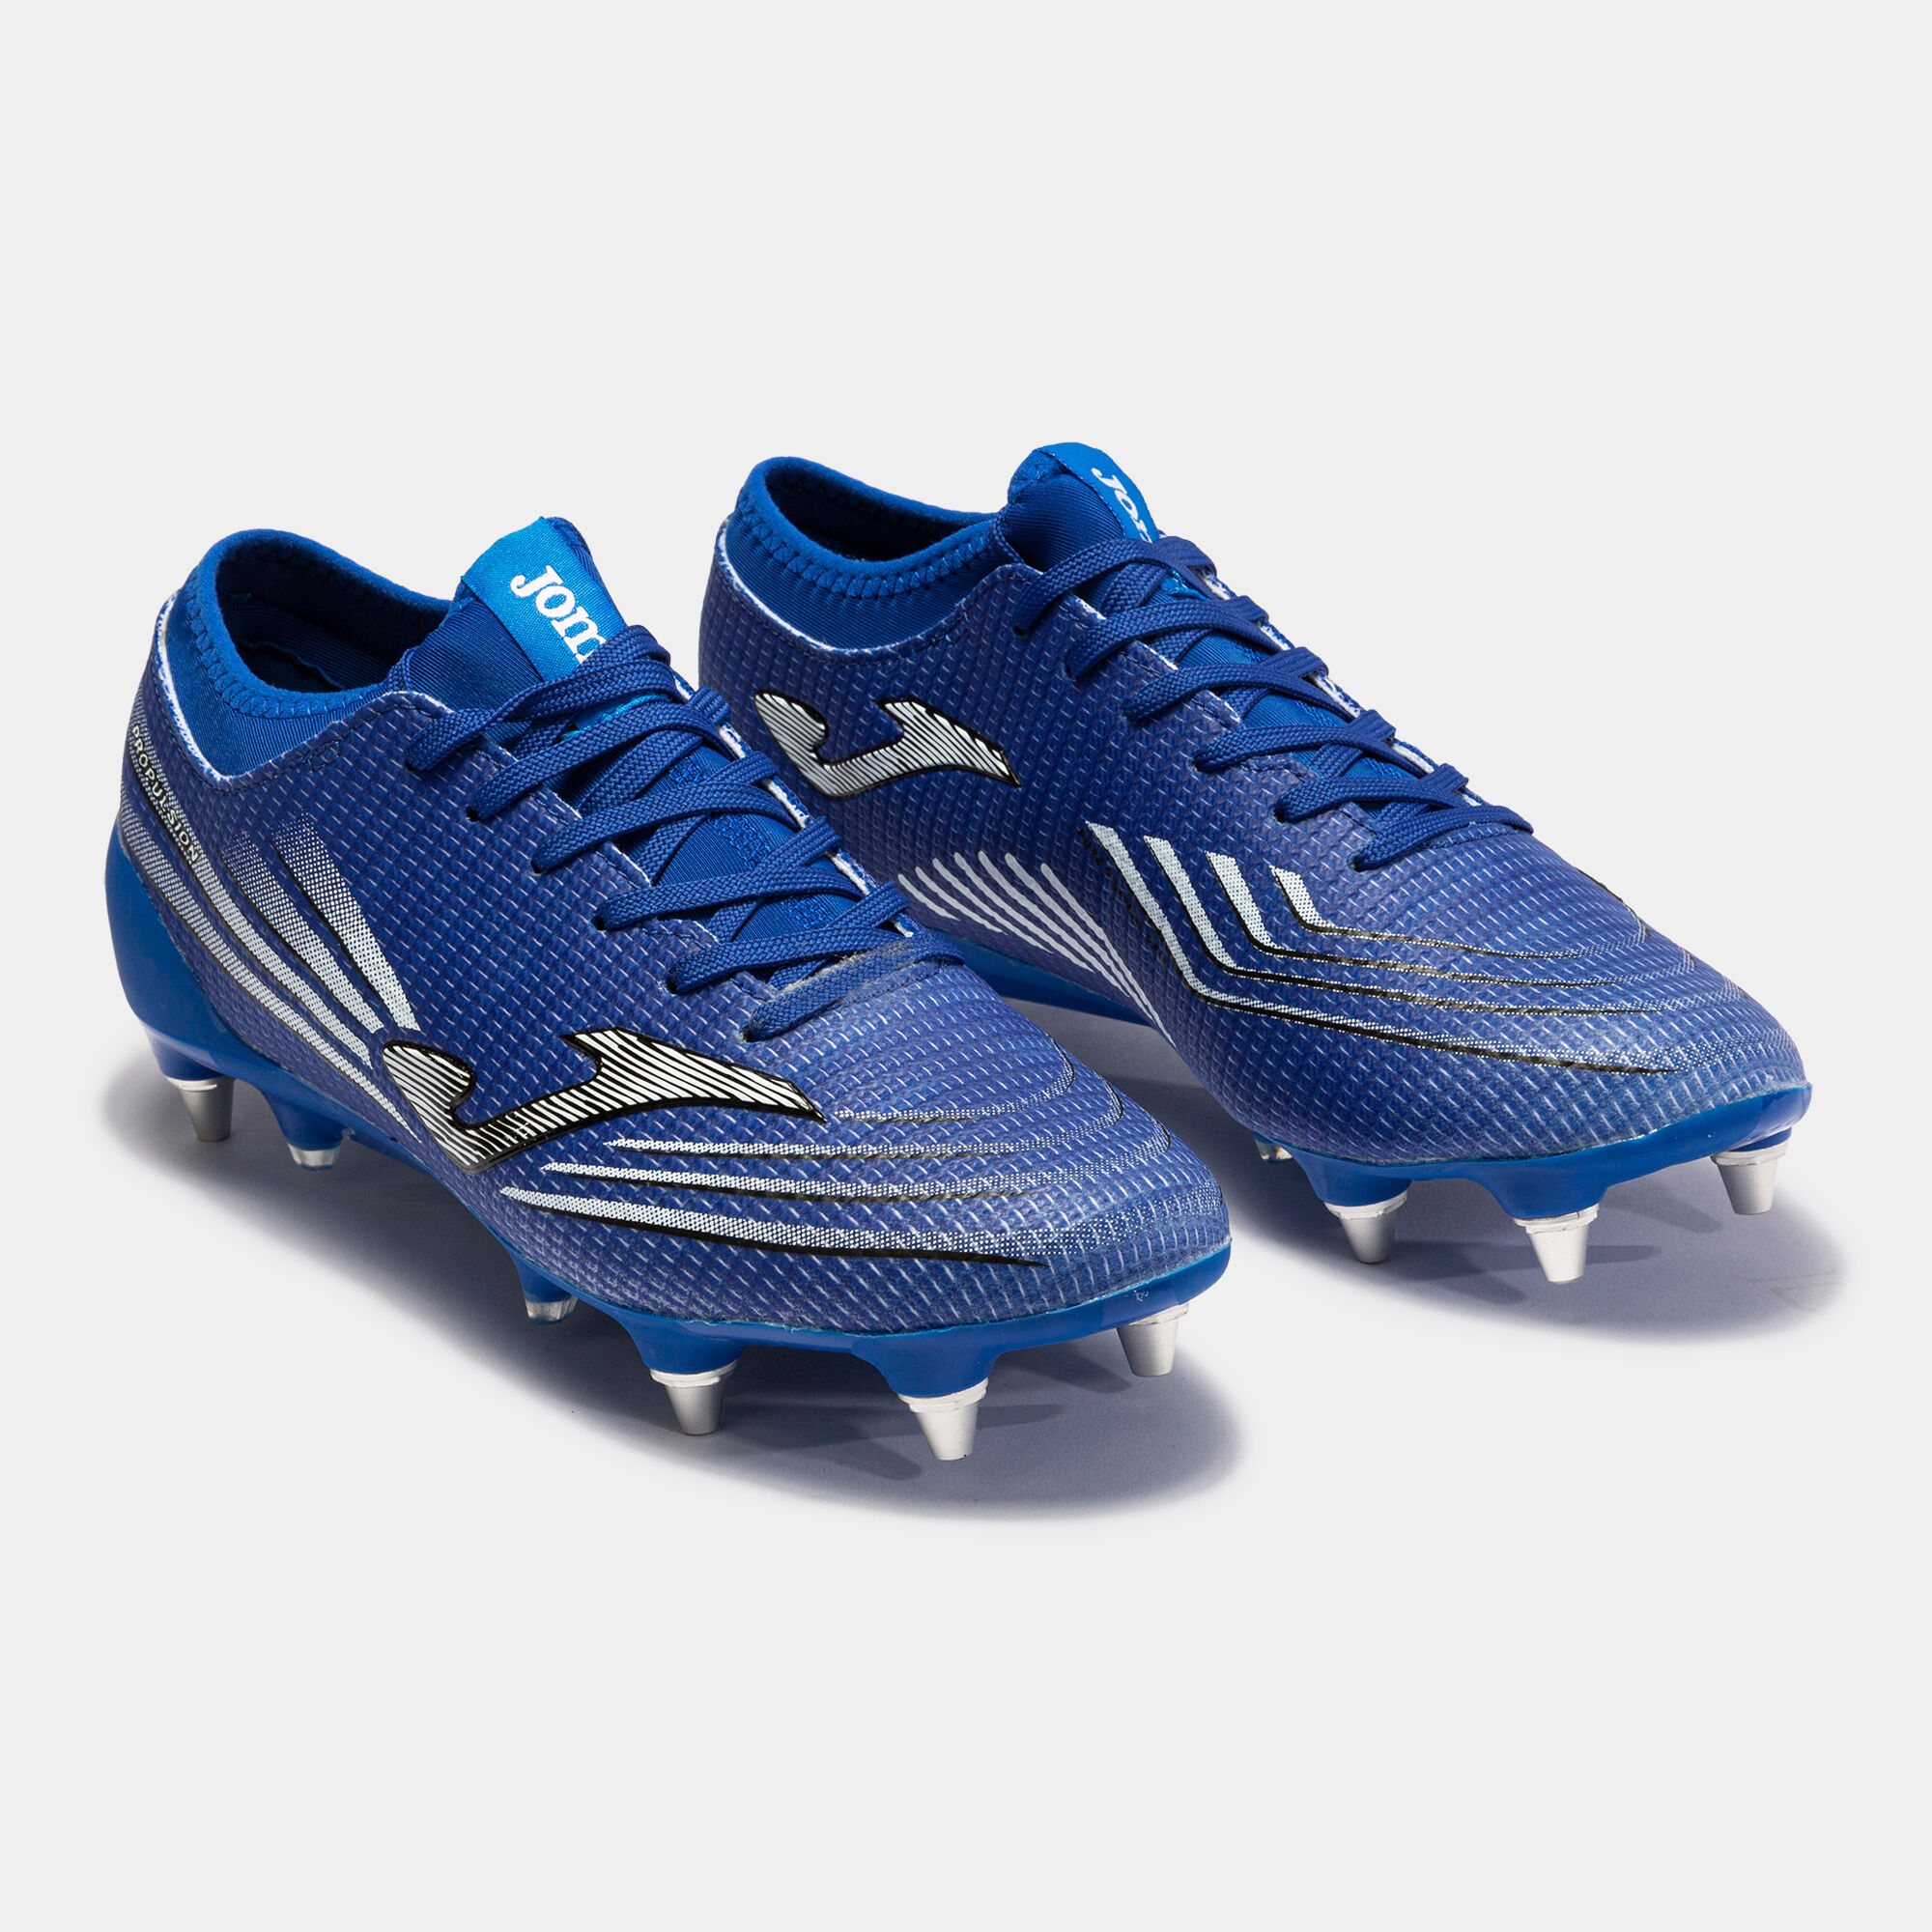 Chaussures football Propulsion Lite 21 terrain souple SG bleu roi